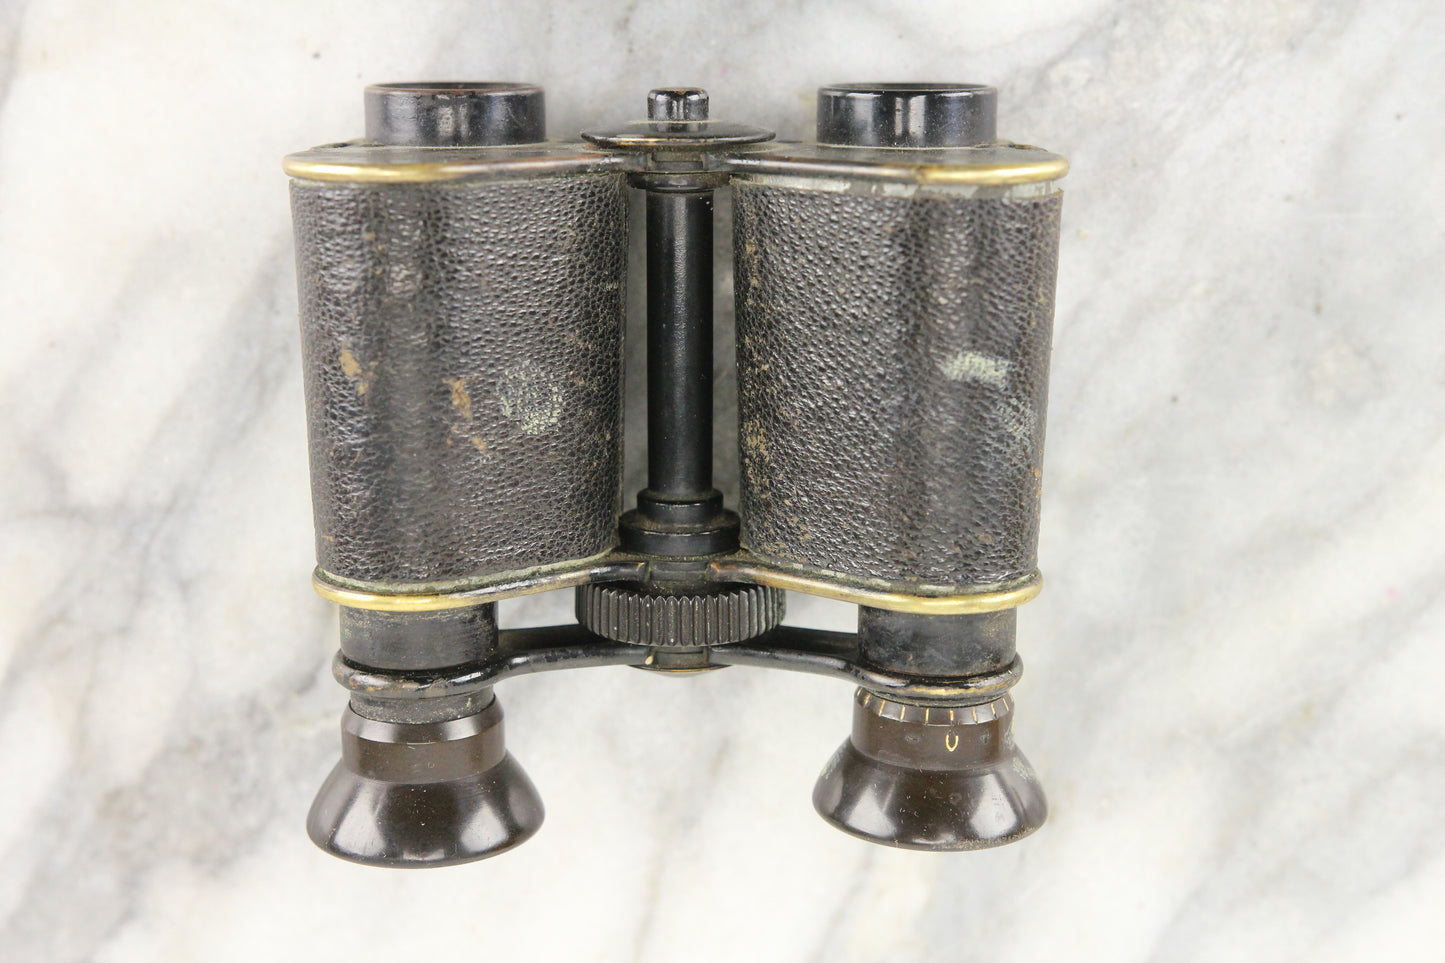 Warner & Swasey Prism Field Glass Power 8 Binoculars, 1902